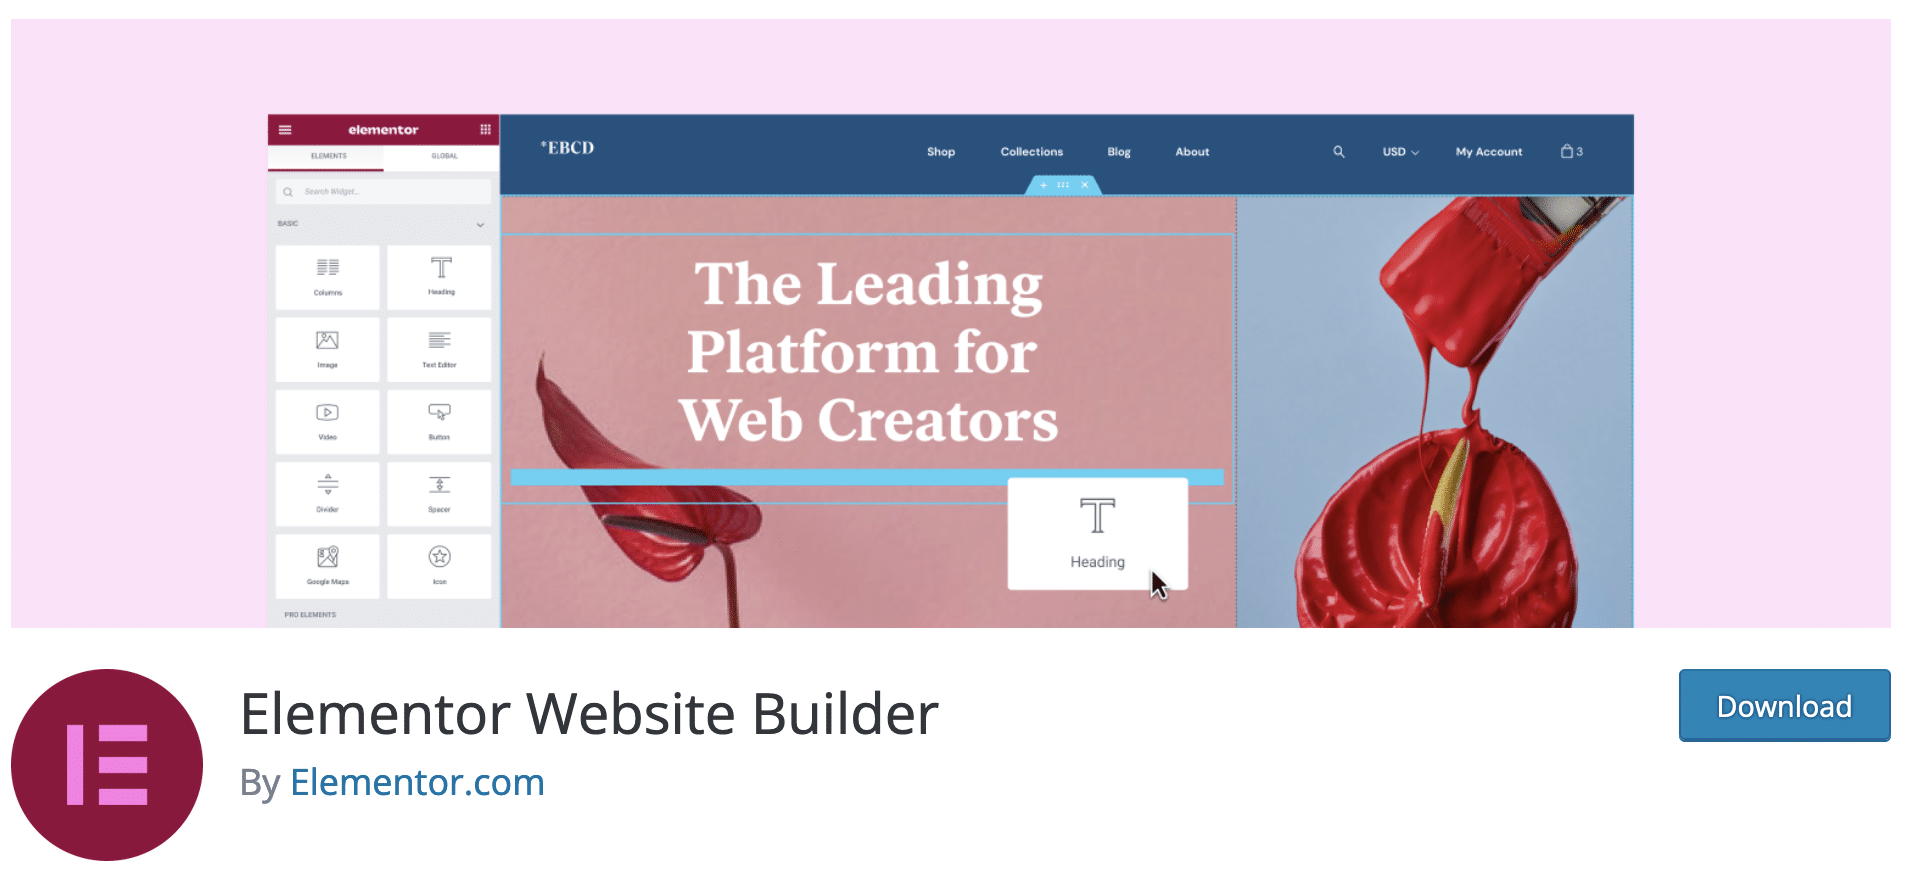 Download the Elementor Website Builder on WordPress.